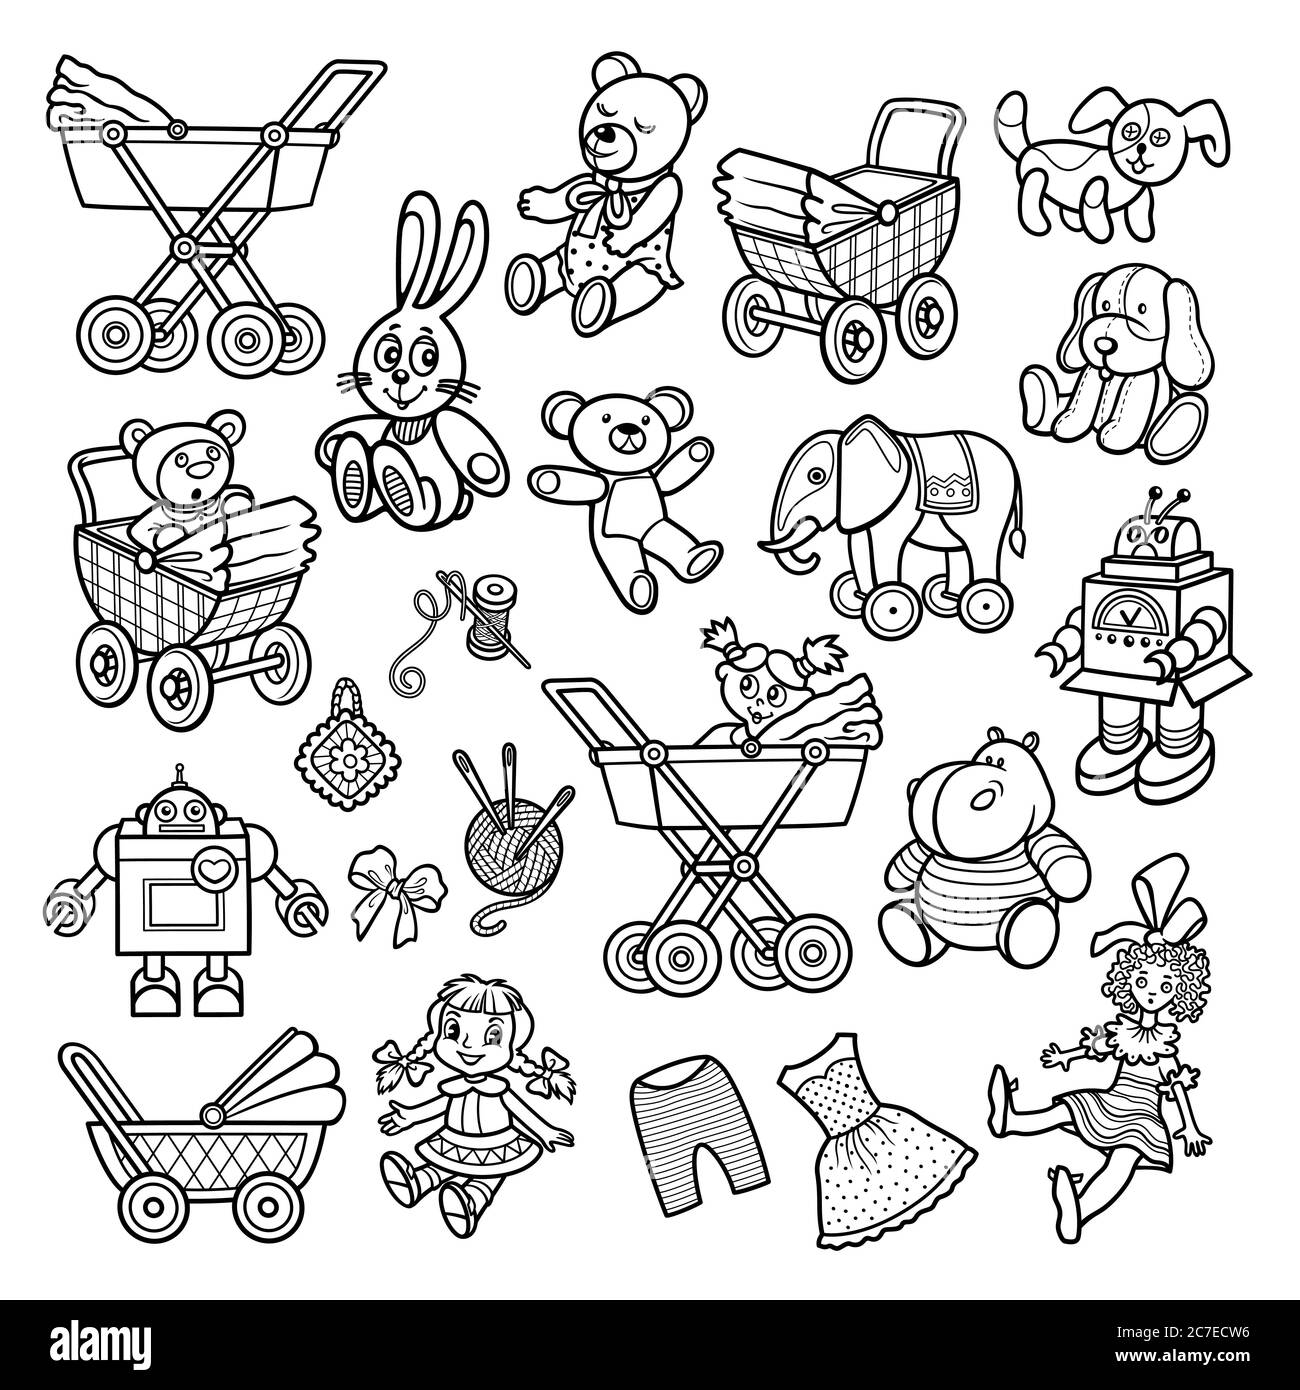 Cartoon doodles hand drawn kids toys objects set. Stock Vector